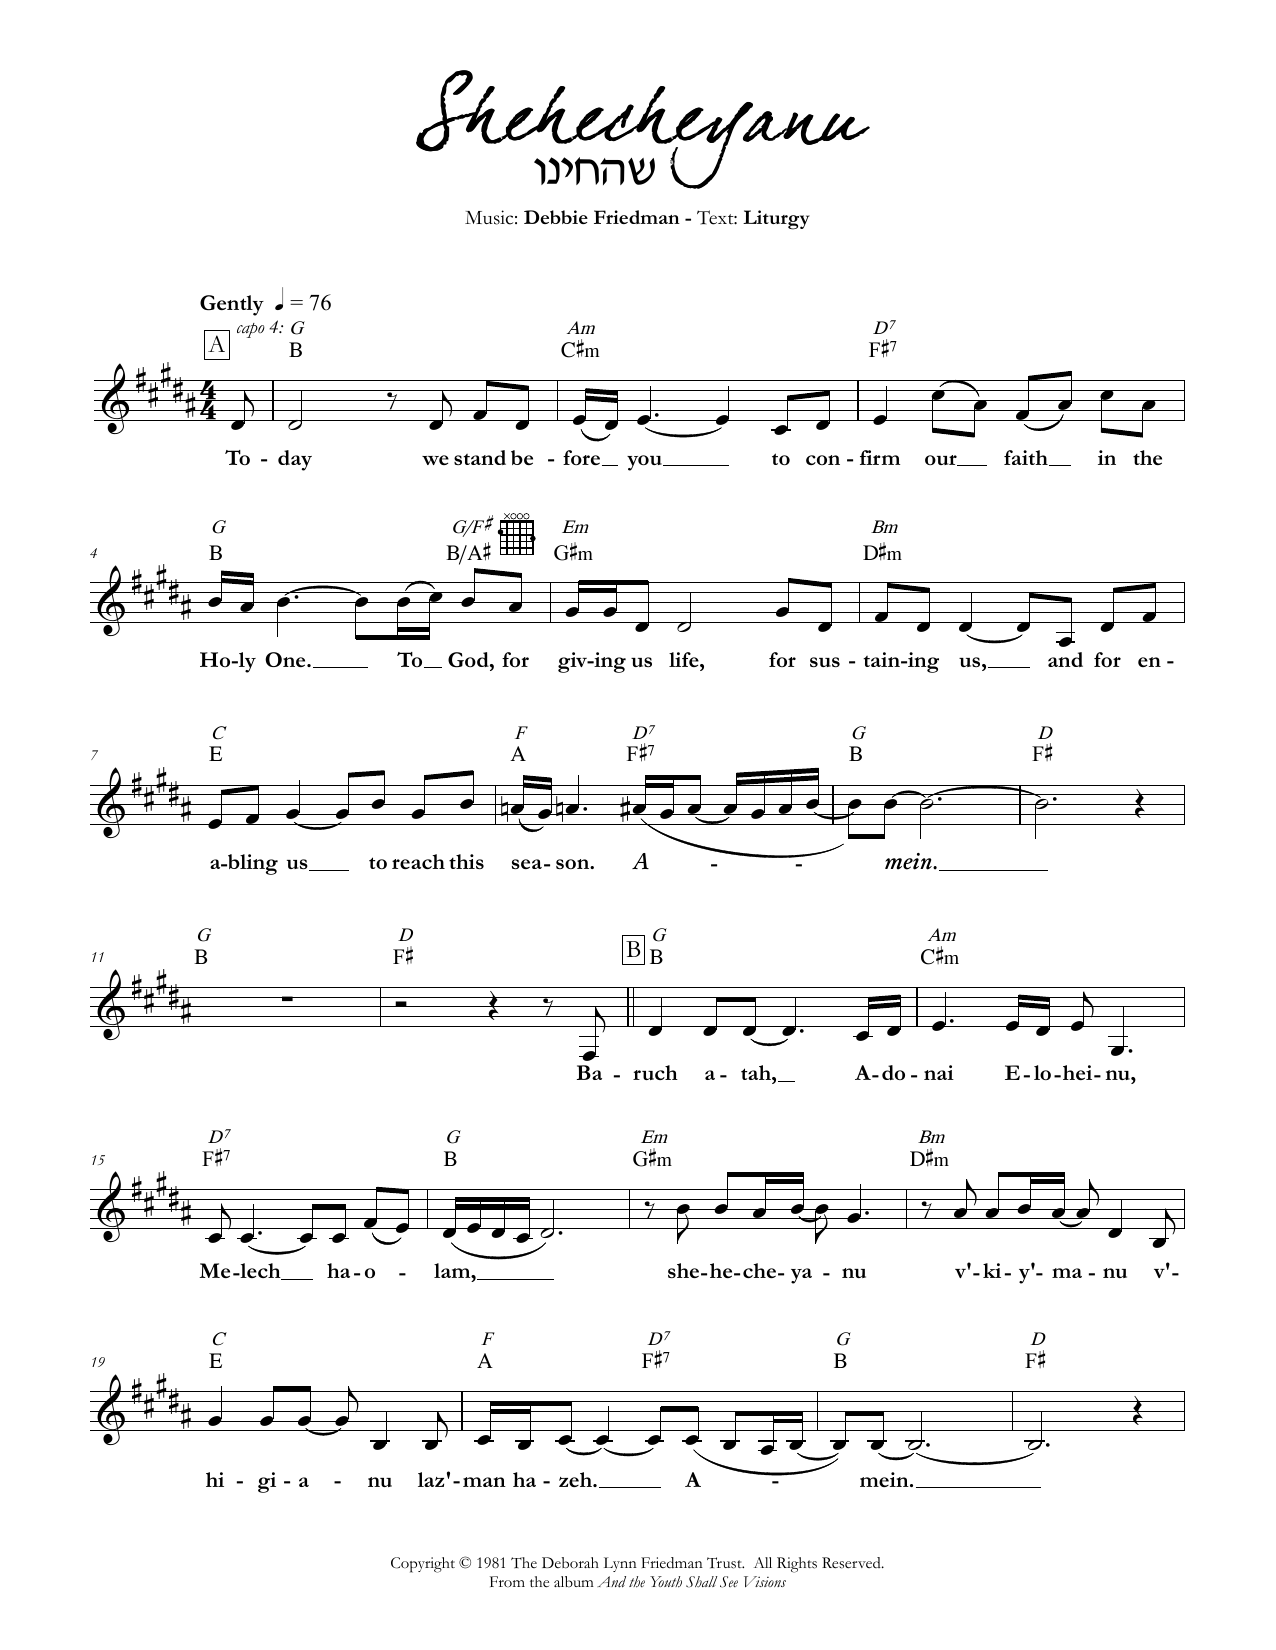 Debbie Friedman Shehecheyanu Sheet Music Notes & Chords for Lead Sheet / Fake Book - Download or Print PDF